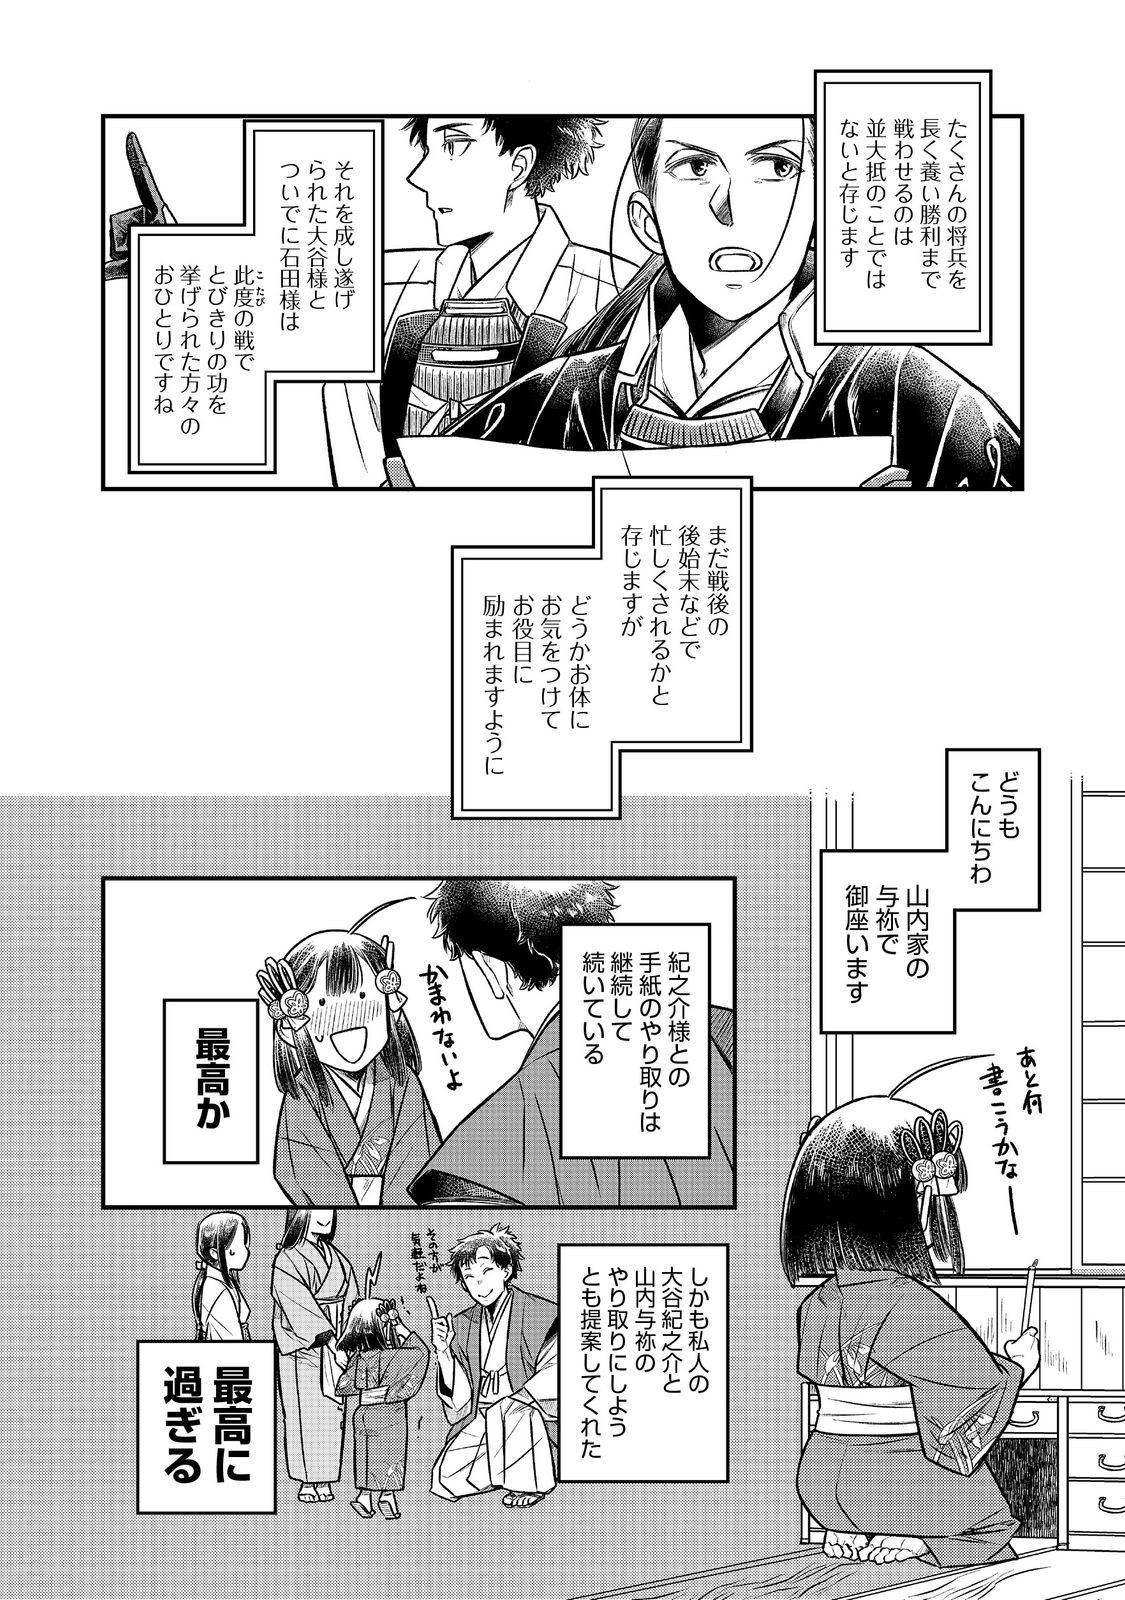 Kitanomandokoro-sama no Okeshougakari - Chapter 8.1 - Page 2